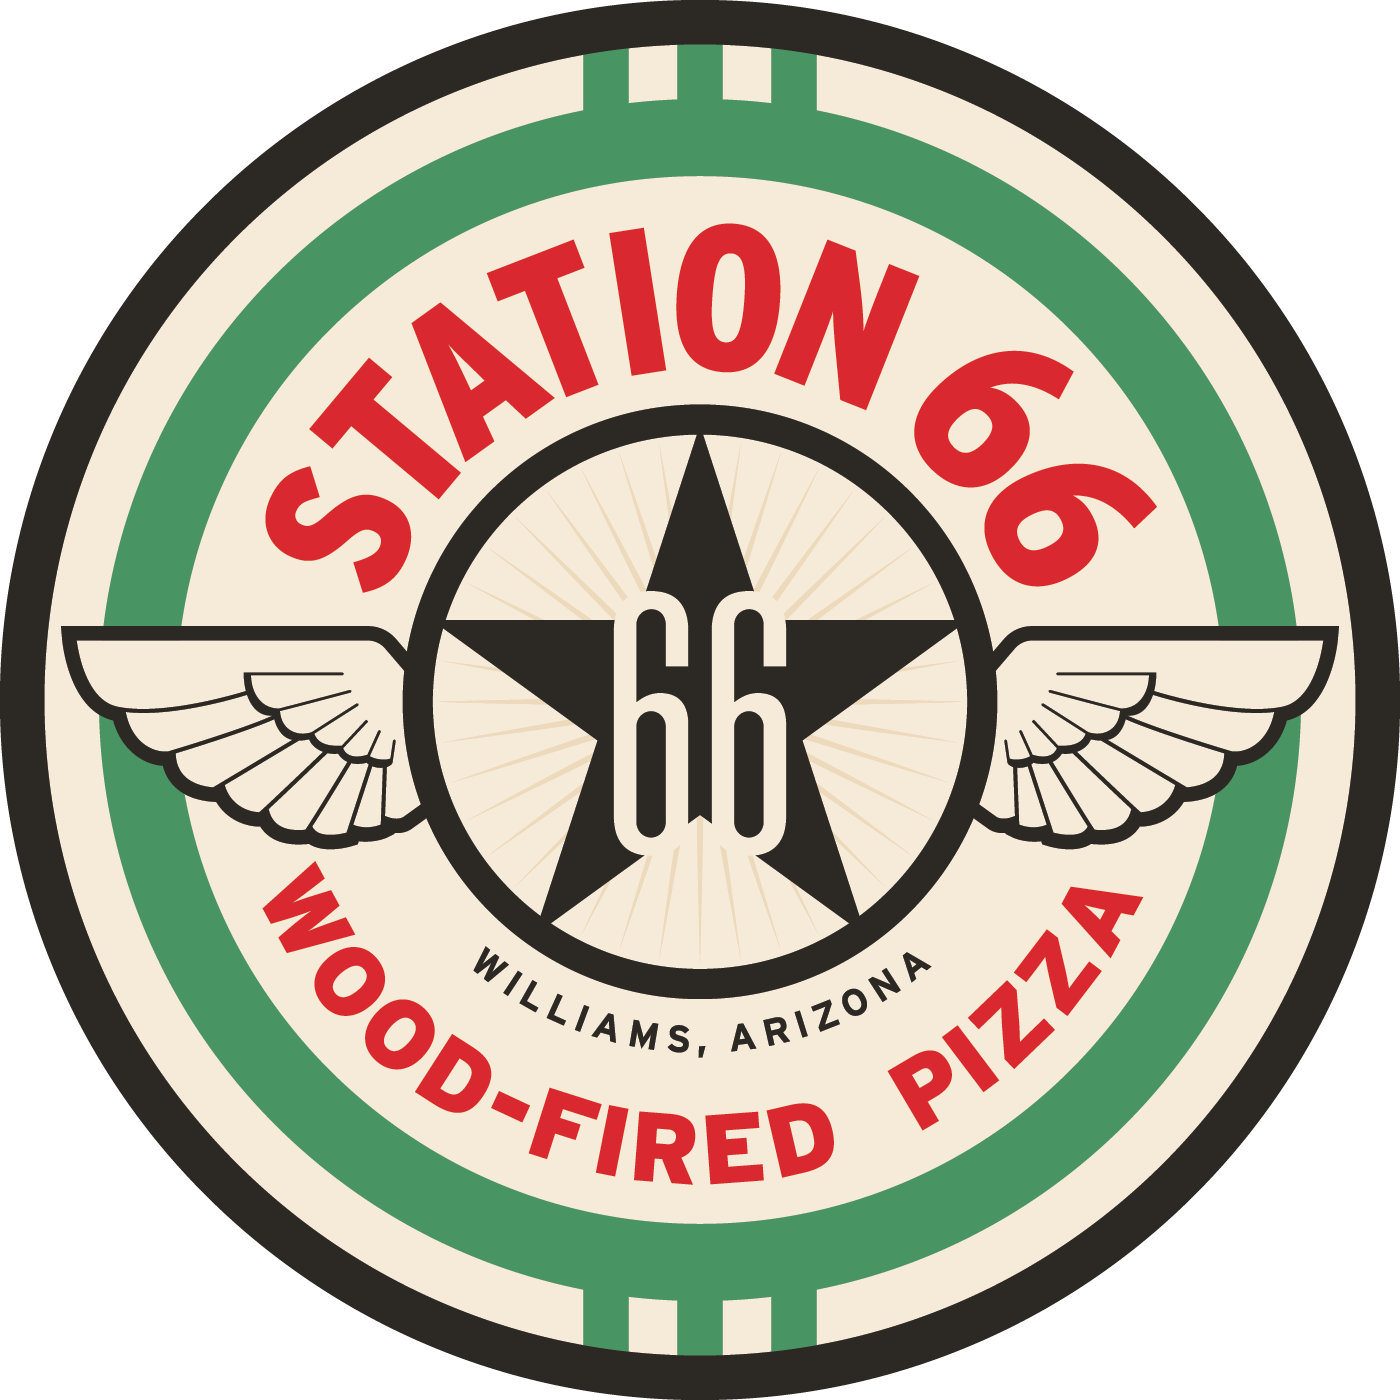 Station 66